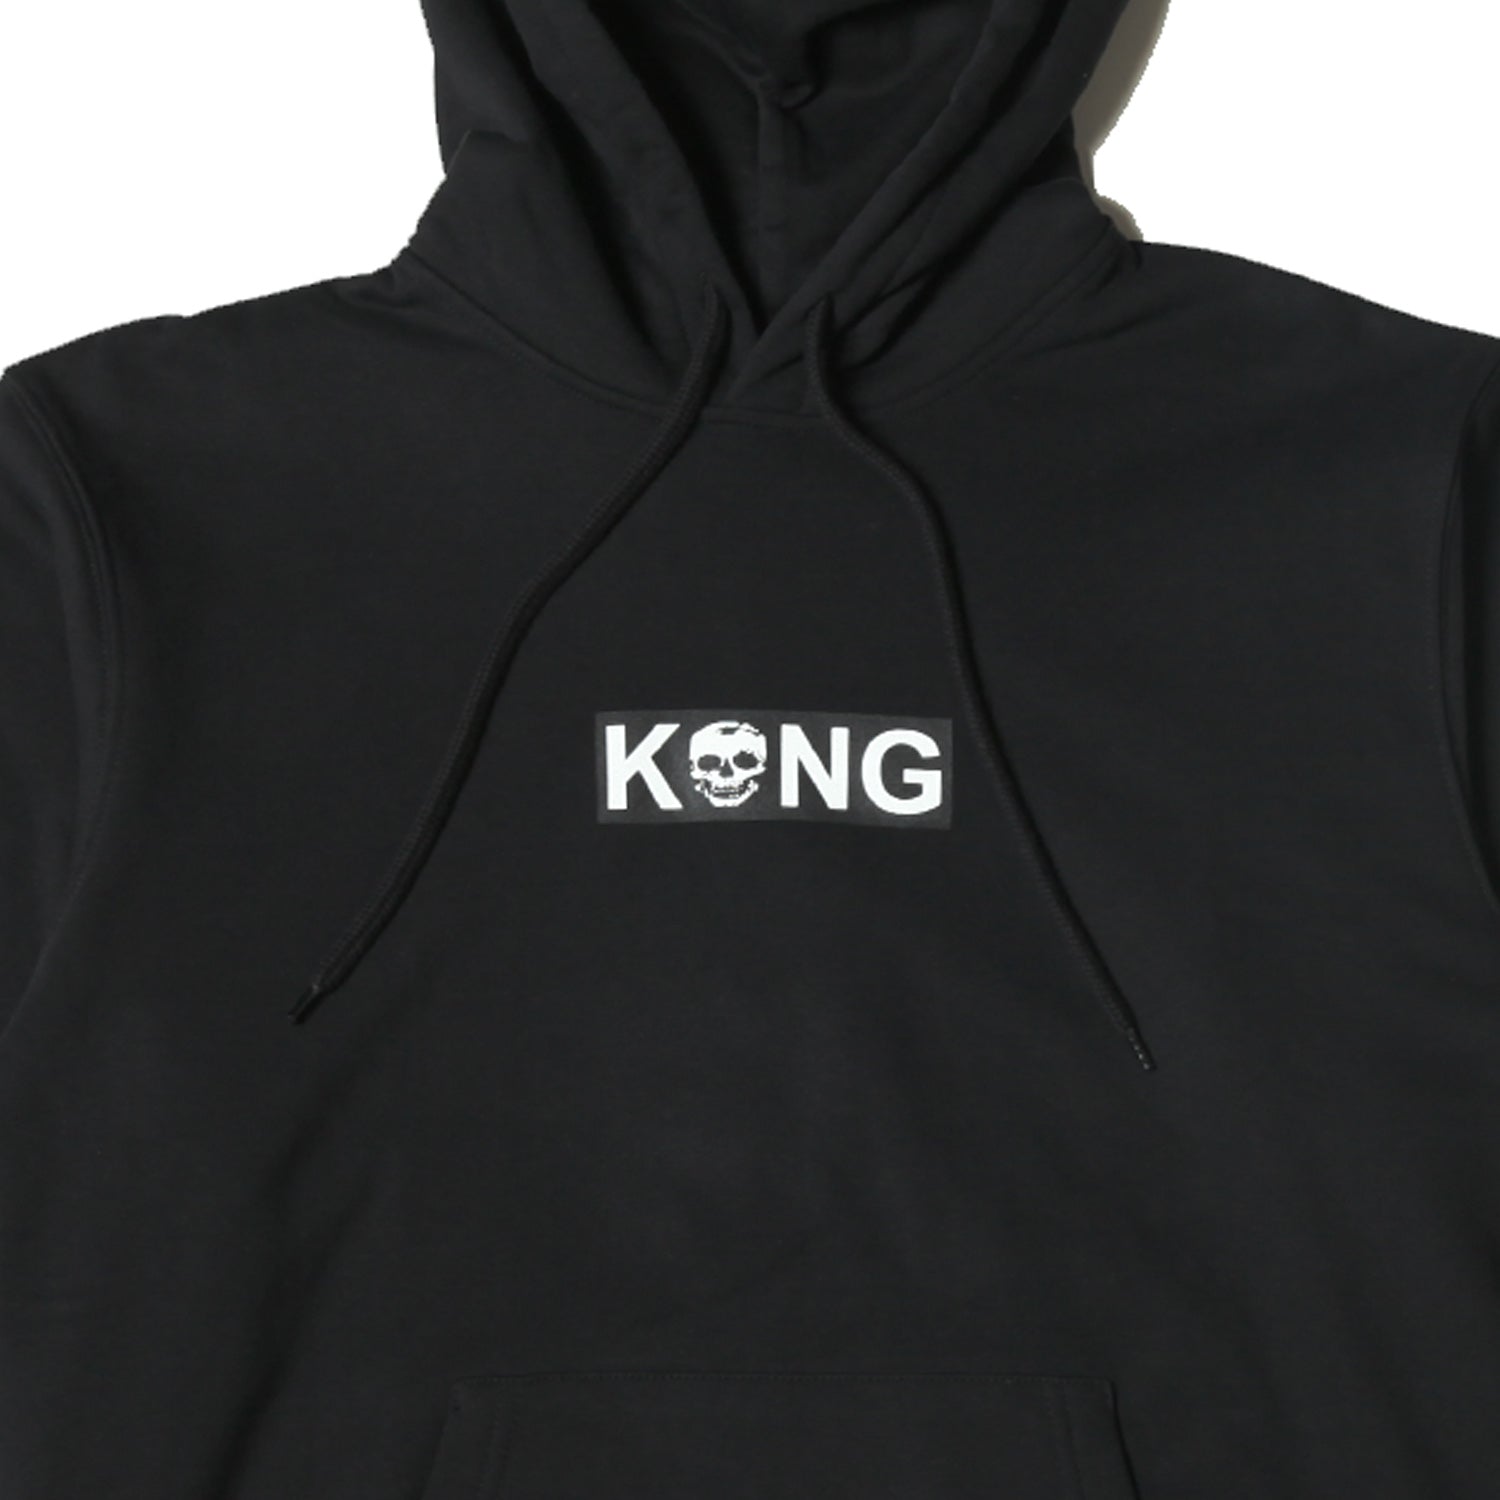 Kong Box Logo Hoodie Black